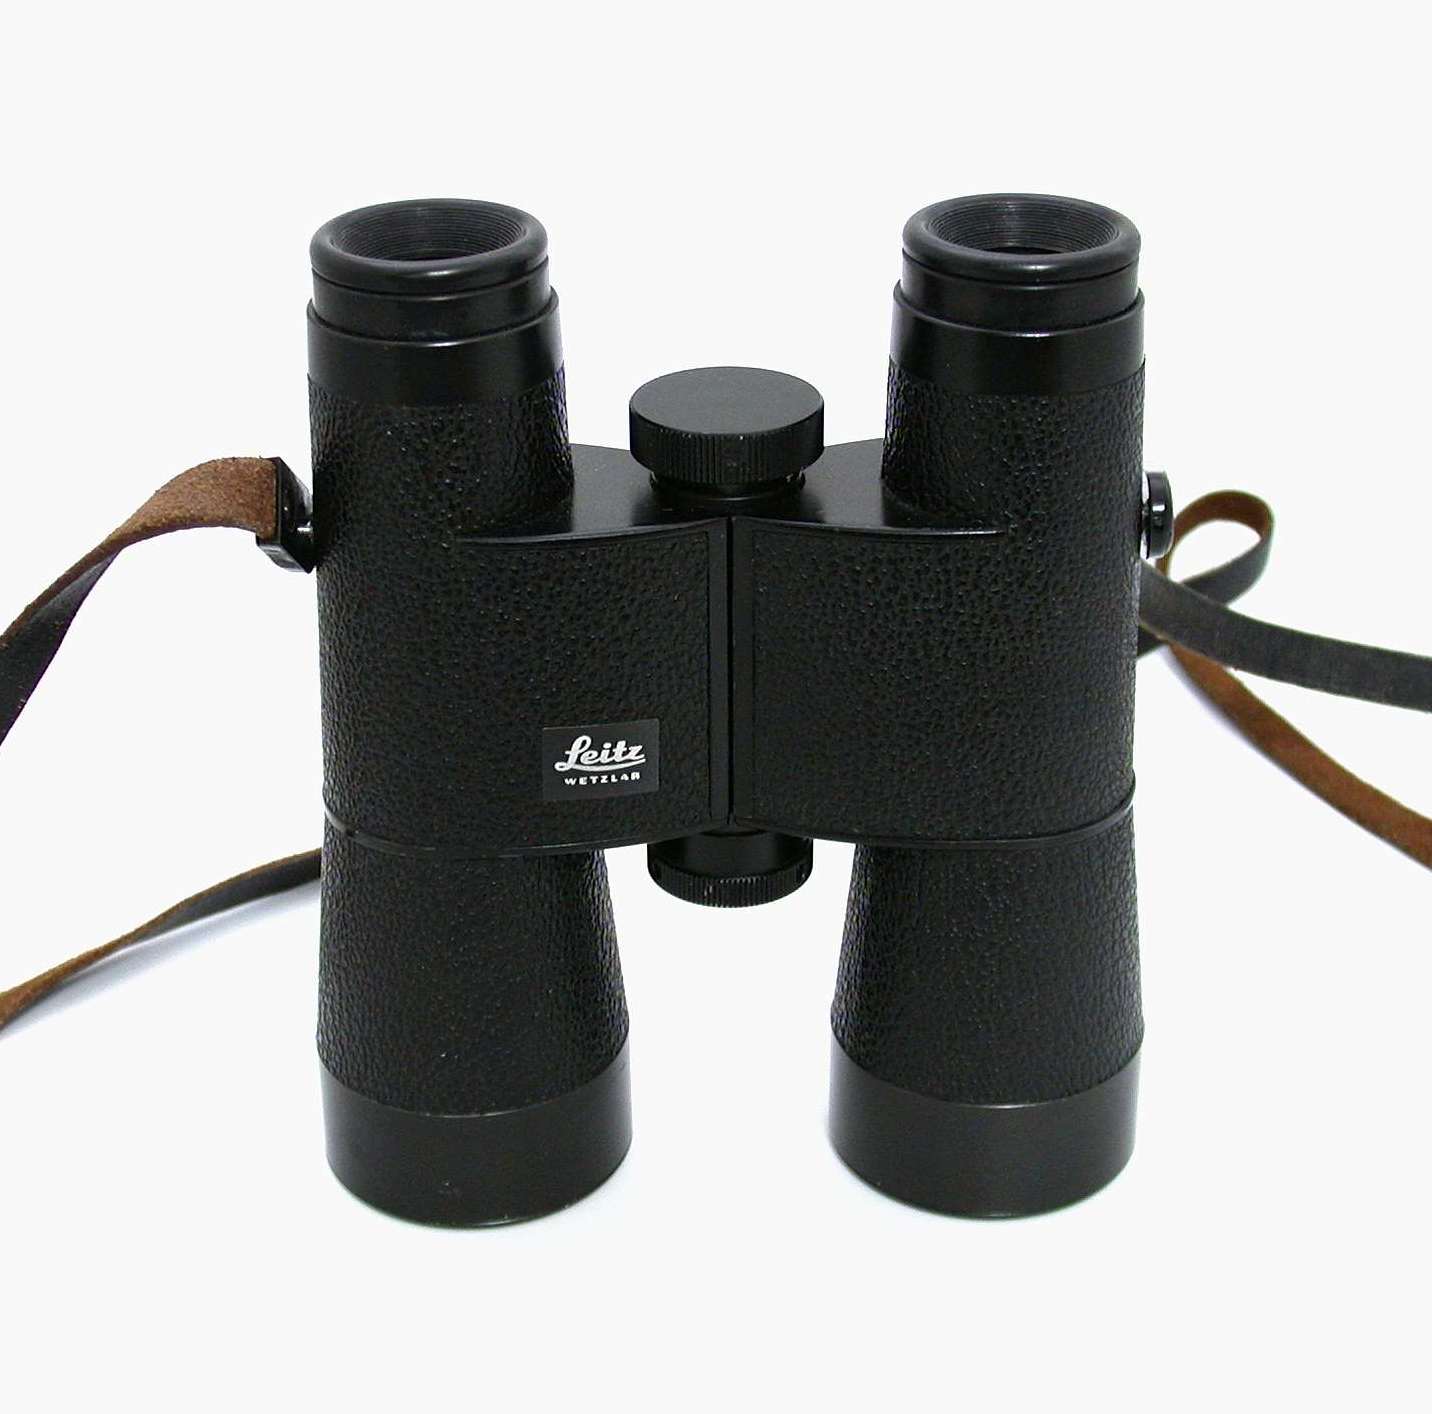 Leitz ライカ ライツ TRINOVID 10×22C 双眼鏡 PORTUGAL #2034 - カメラ